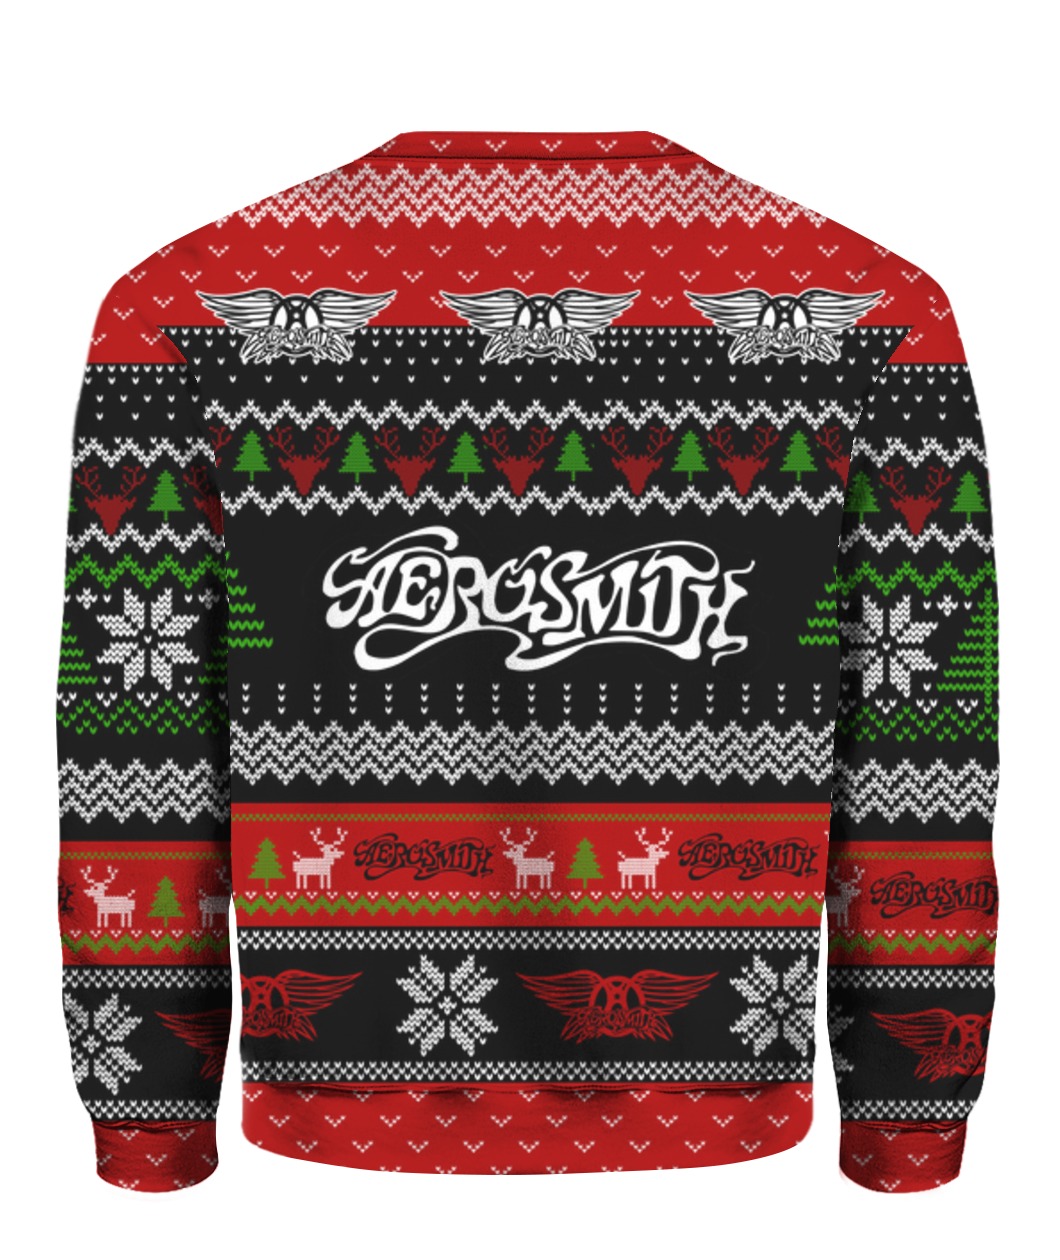 Aerosmith full printing ugly christmas sweater 4